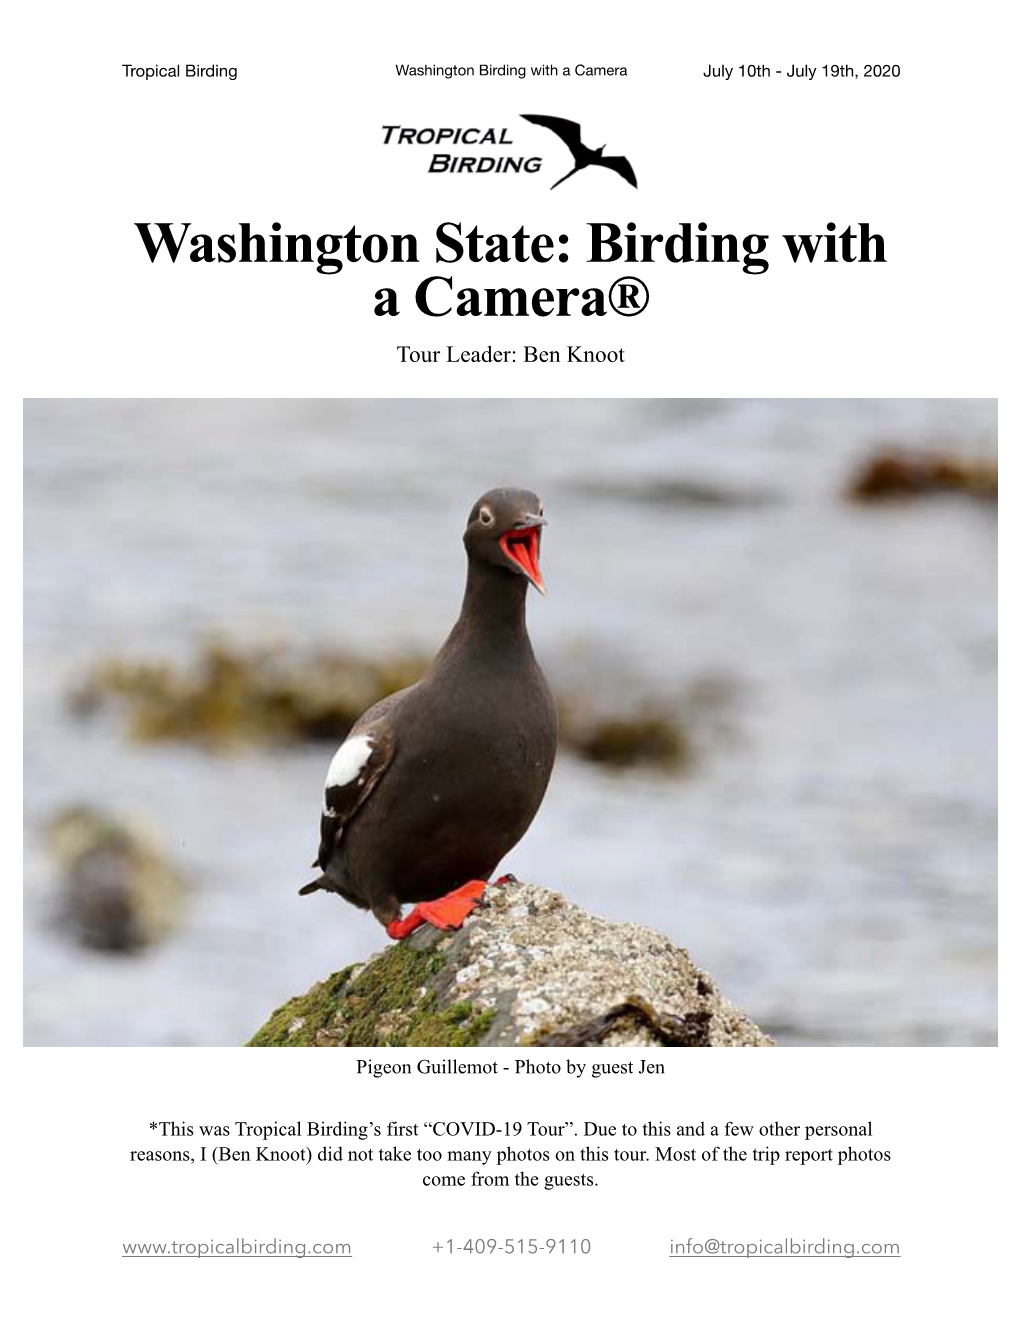 Washington State BWC Trip Report